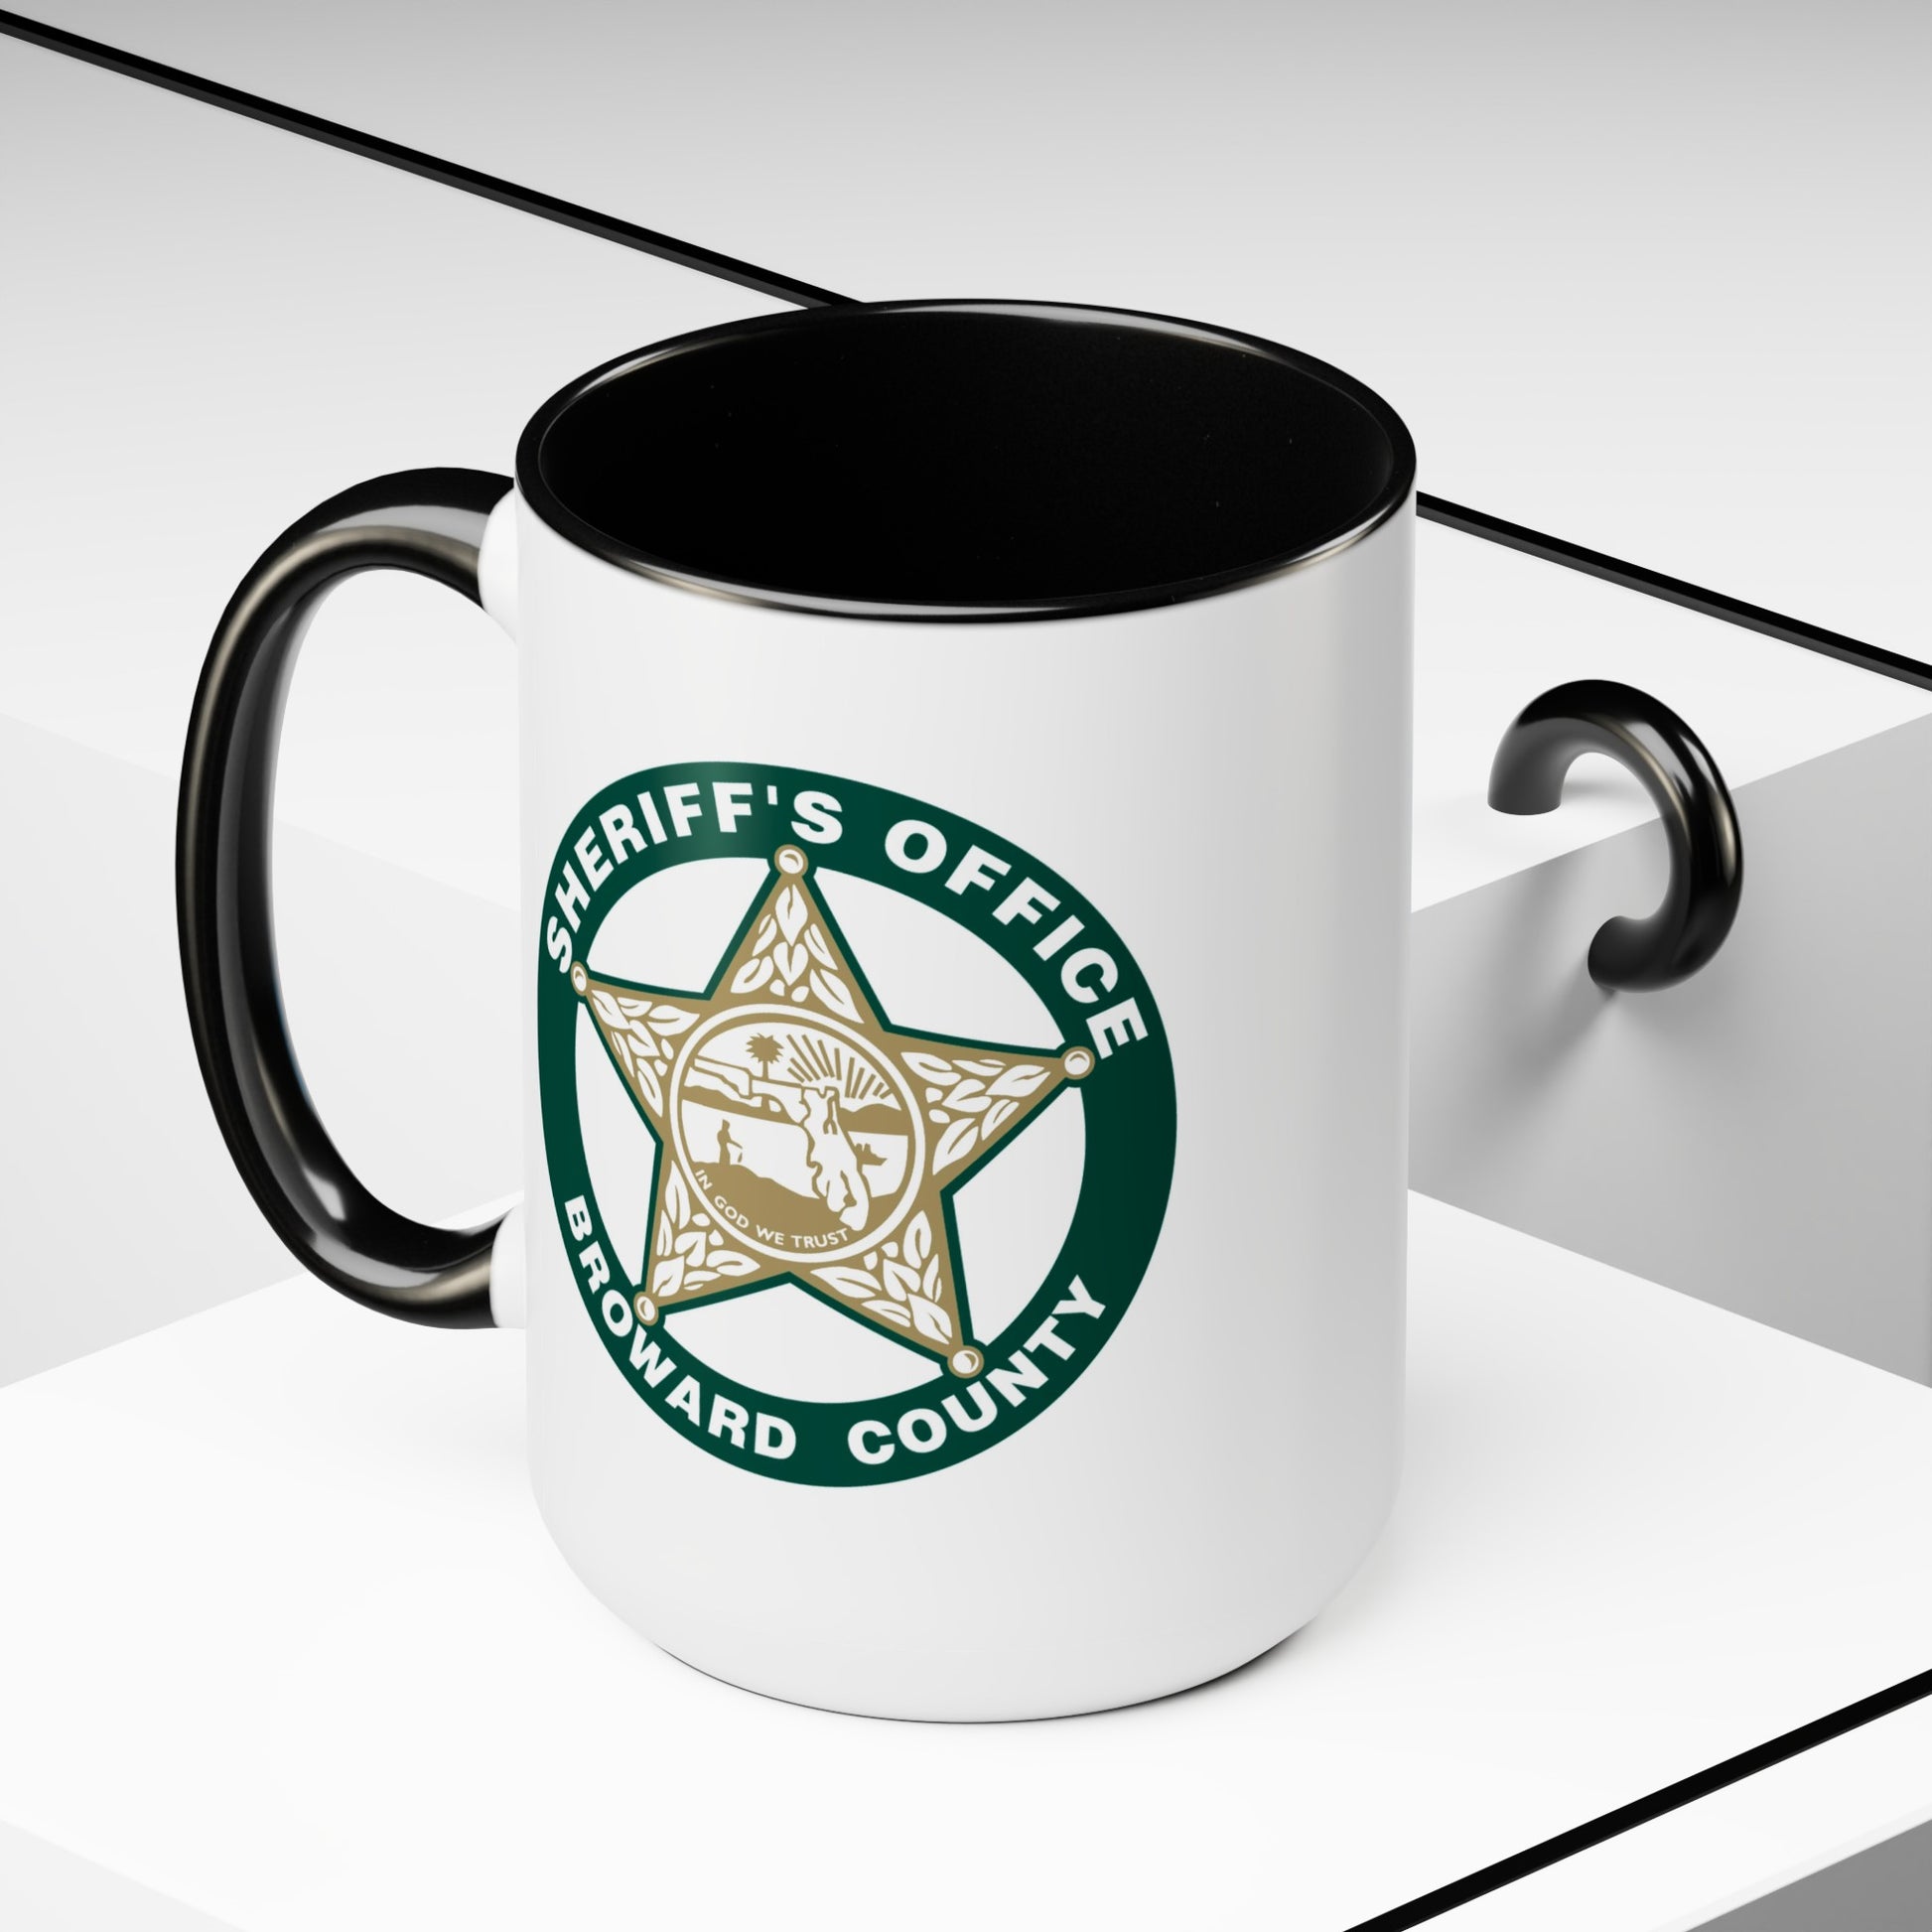 Broward County Sheriff Coffee Mugs - Double Sided Black Accent White Ceramic 15oz by TheGlassyLass.com